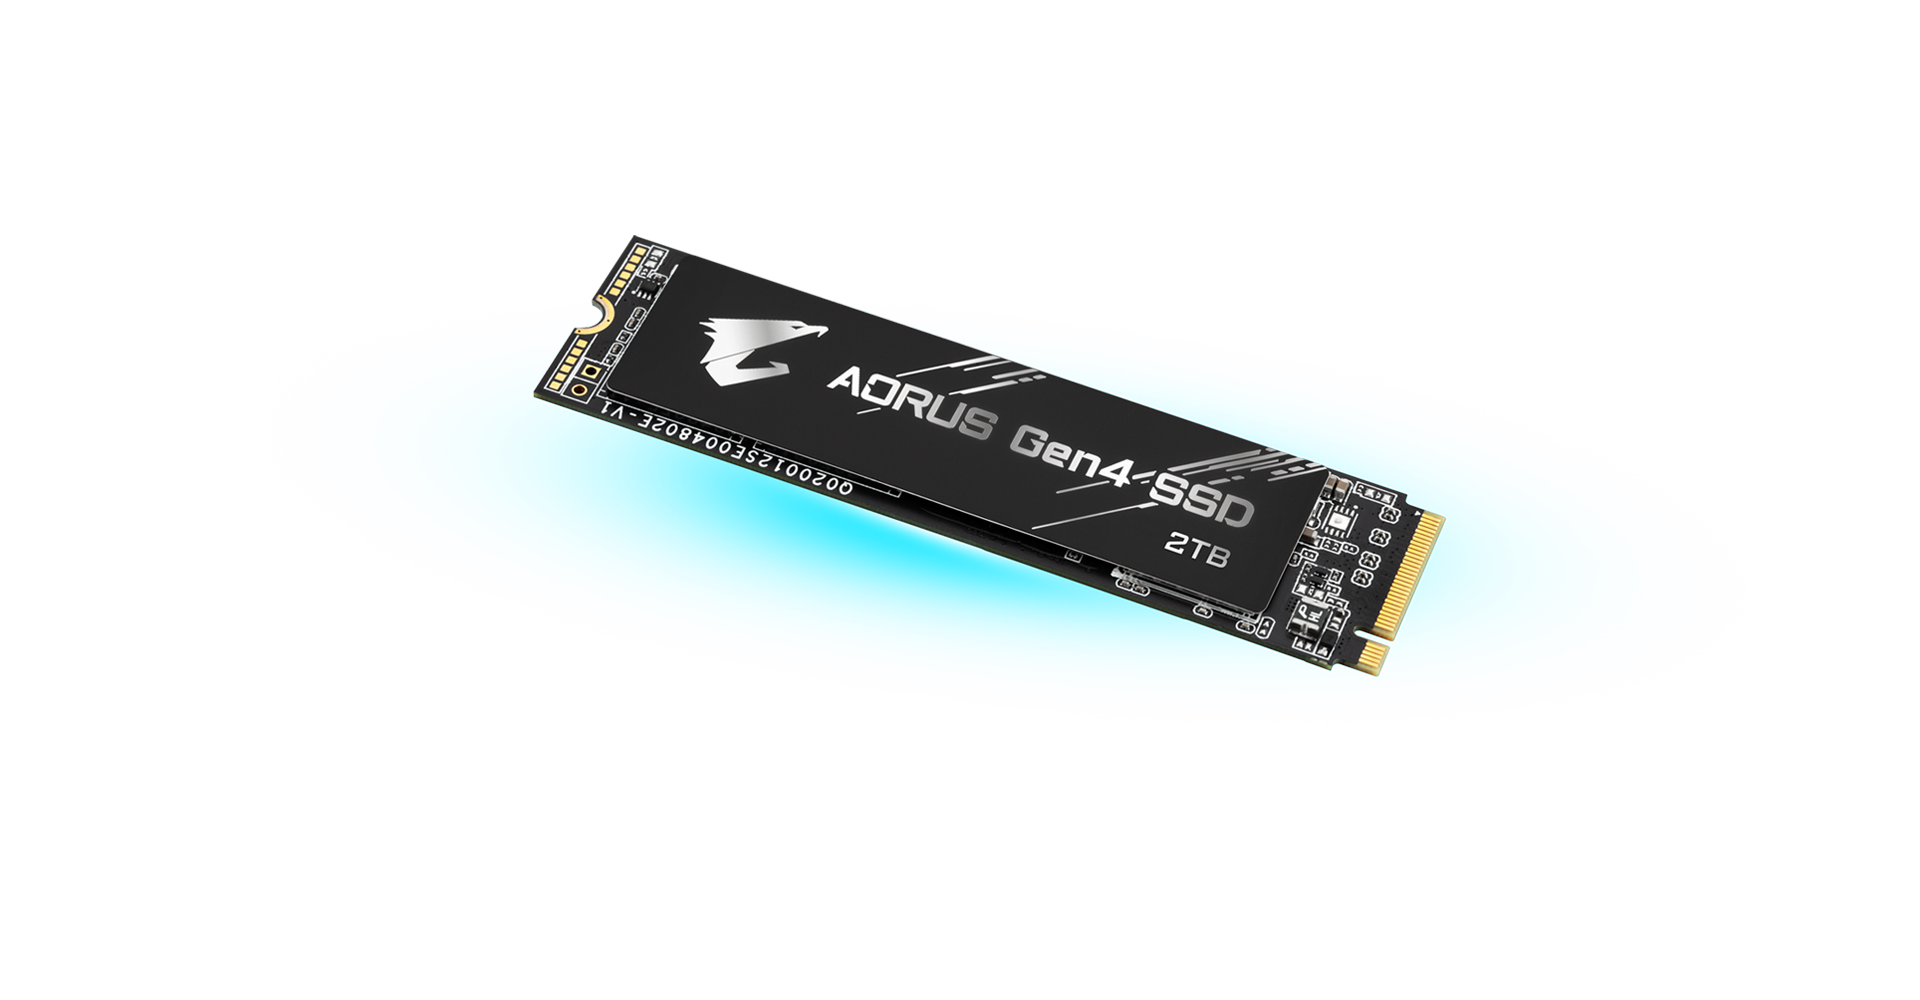 AORUS Gen4 SSD 2TB Key Features | SSD - GIGABYTE Global